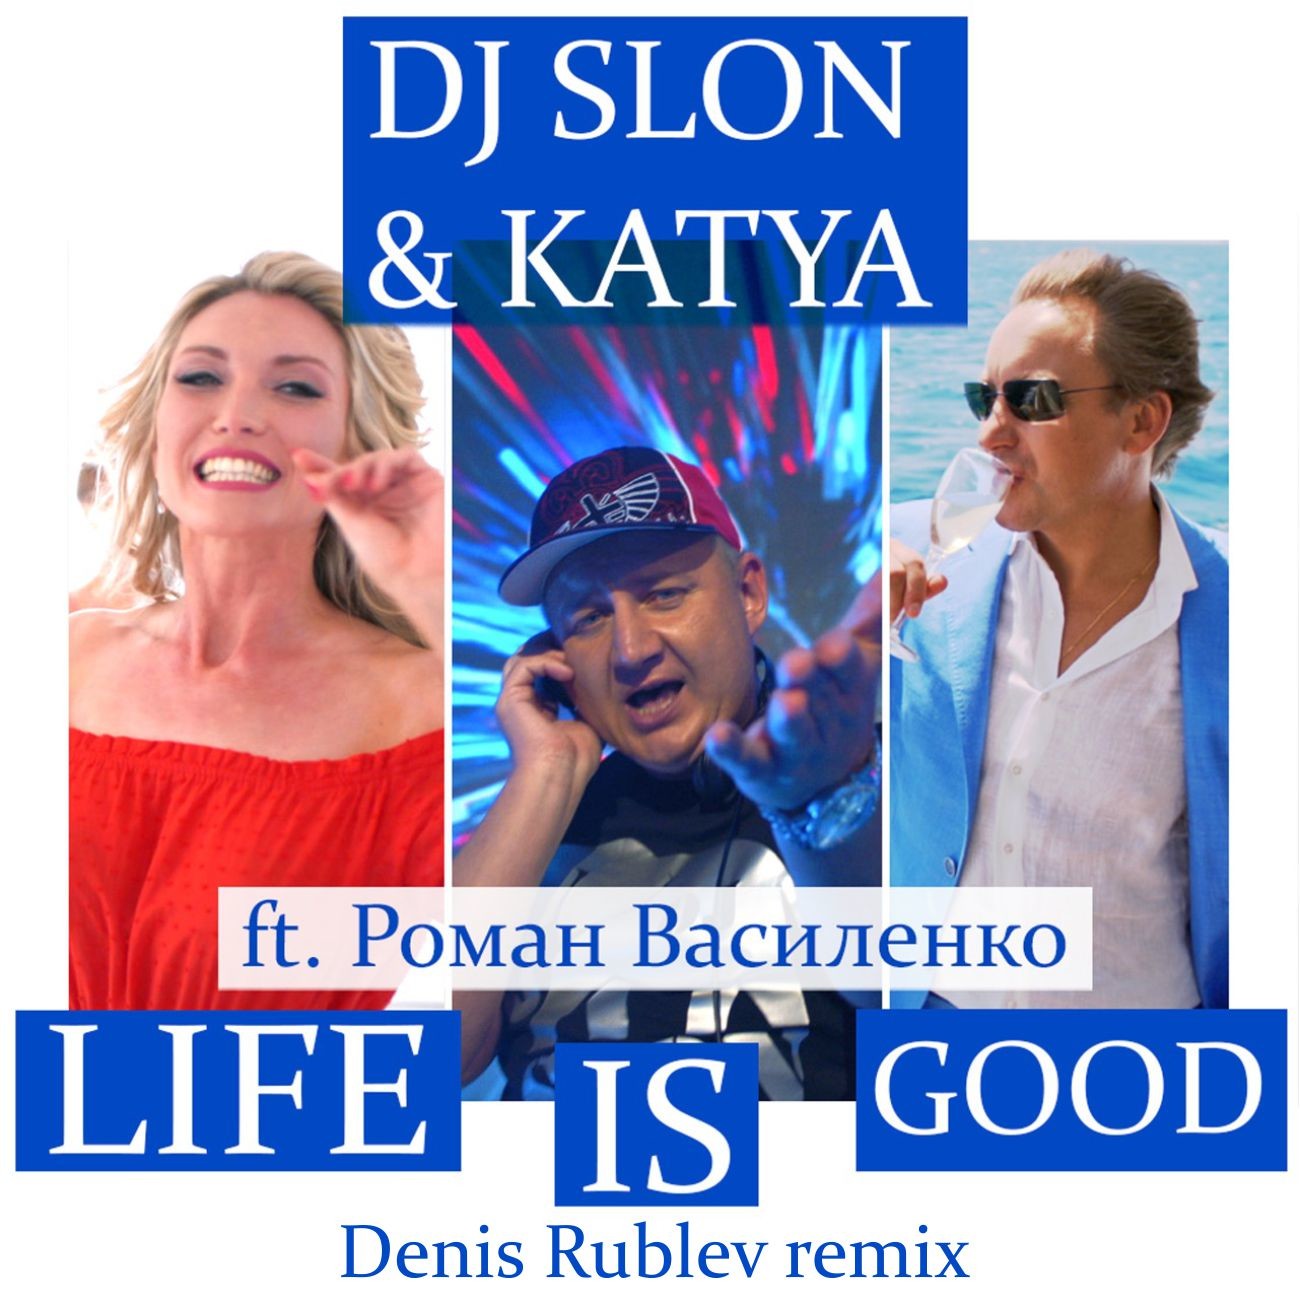 Life is good василенко. DJ Slon Katya. DJ Slon альбомы. Дж слон и Катя.